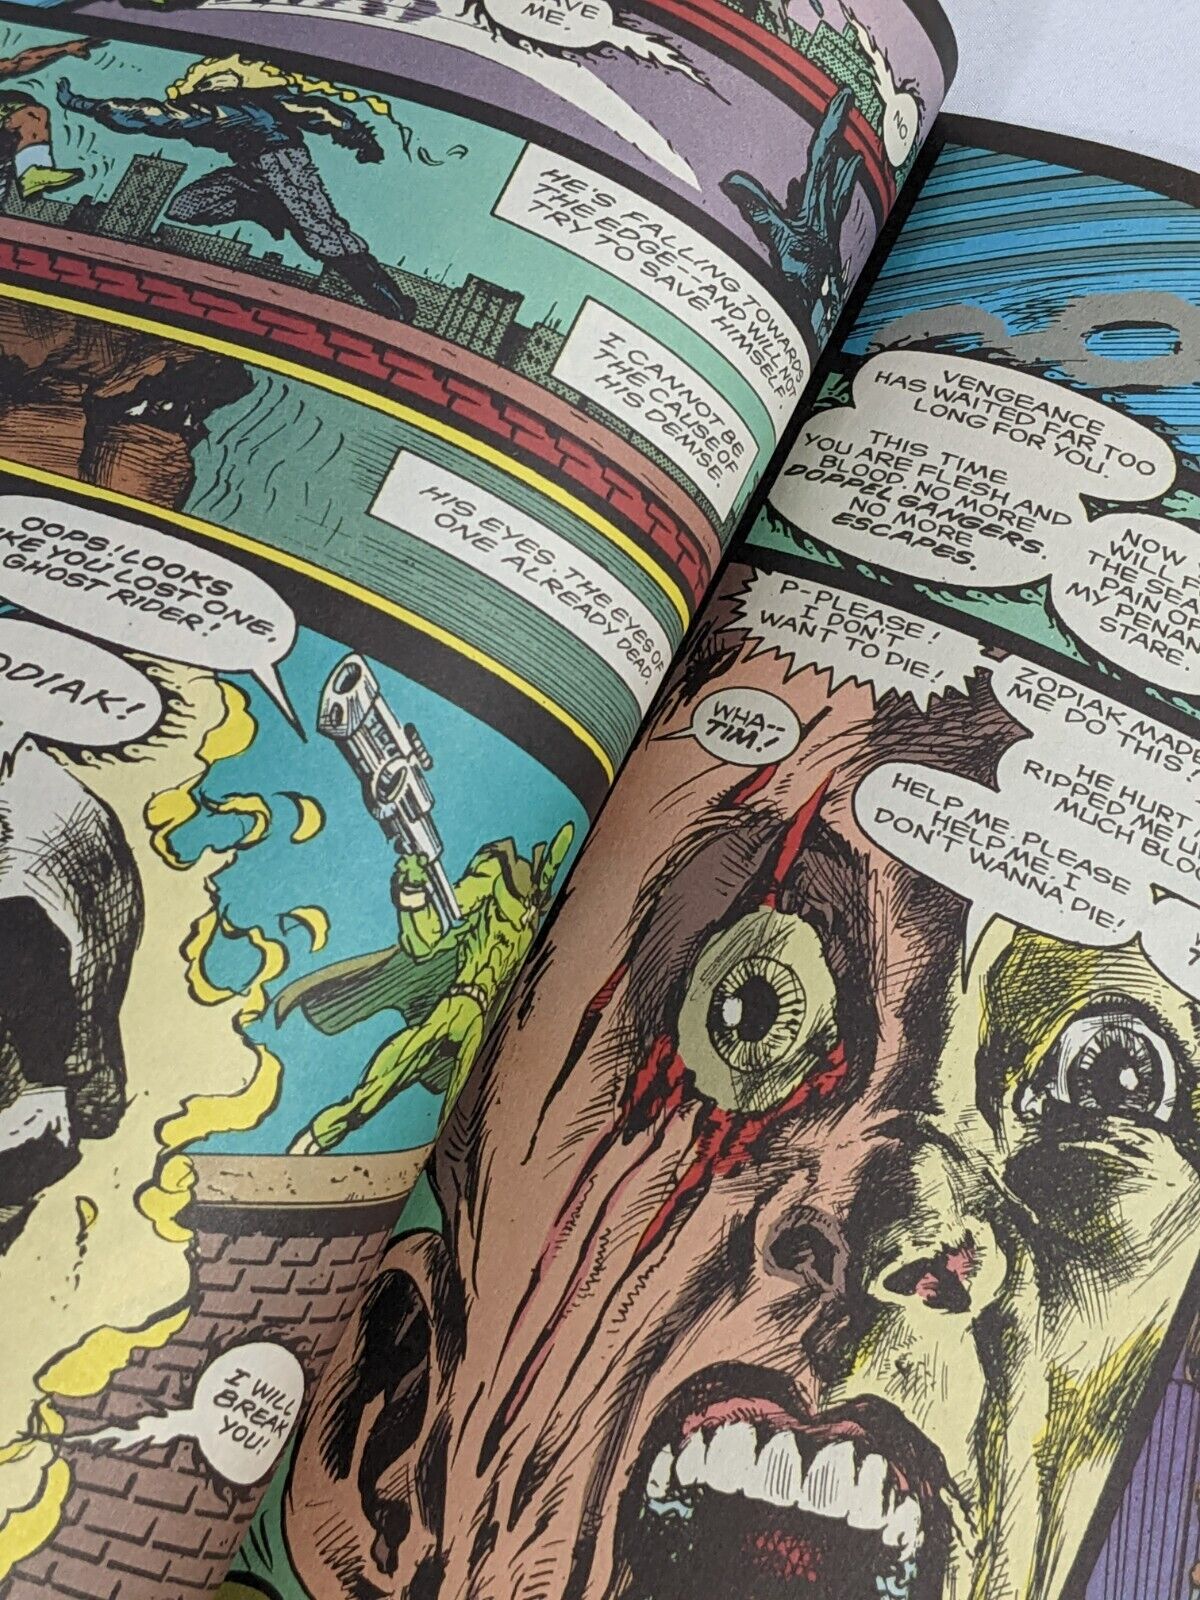 Marvel Comics Ghost Rider The Fantastic Four 30th Anniversary #19 November 1991